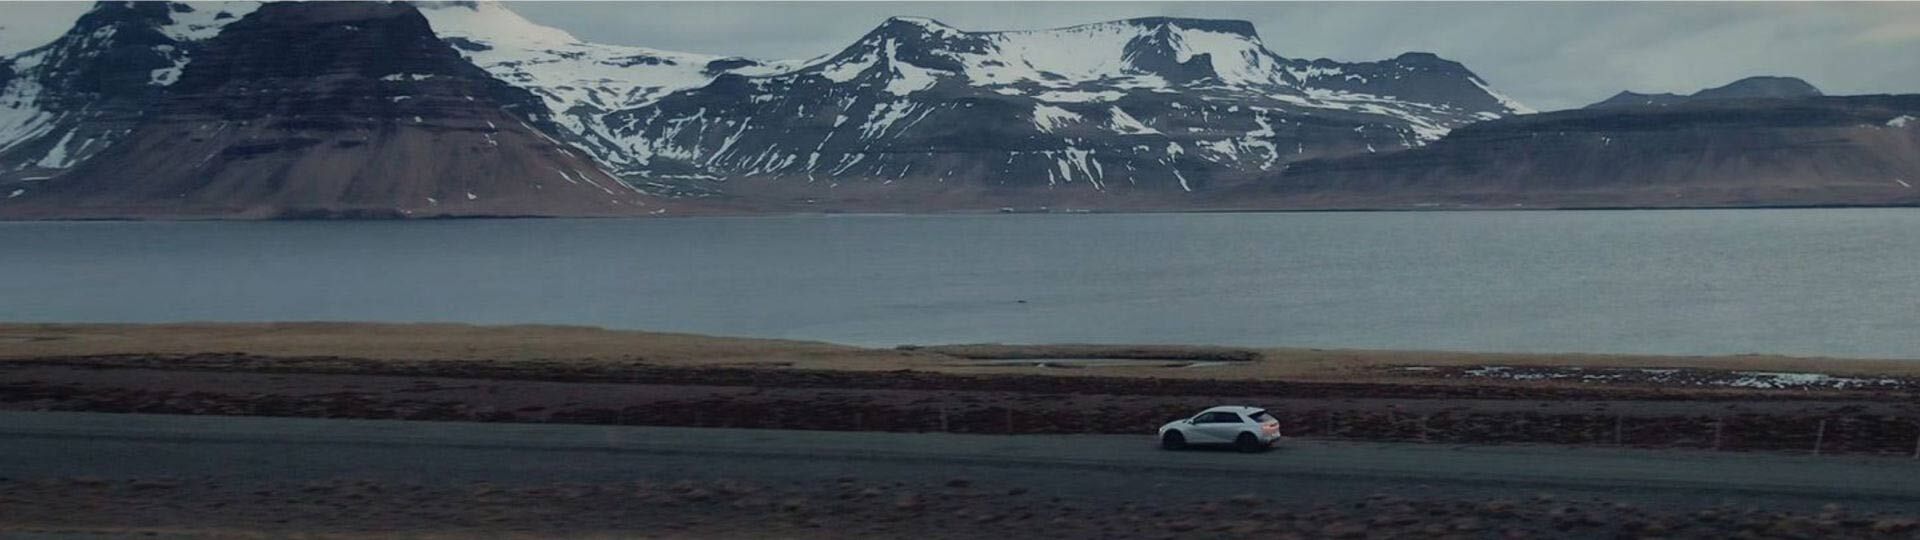 IONIQ 5 Driving in Iceland